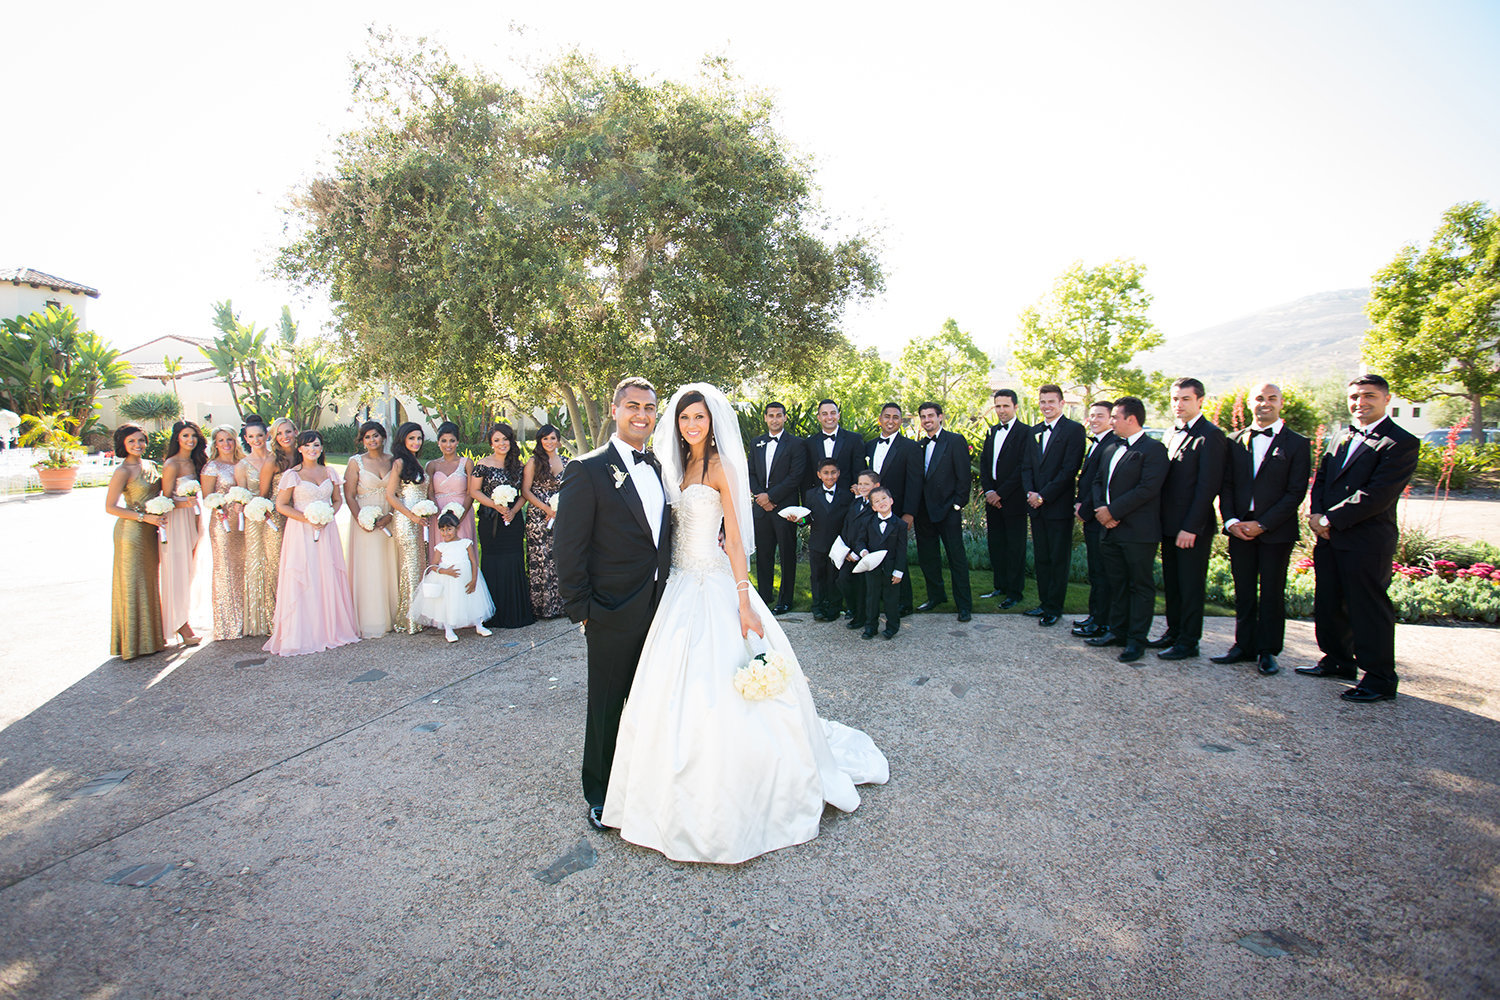 Massive wedding party at the Crosby Club in Rancho Santa Fe